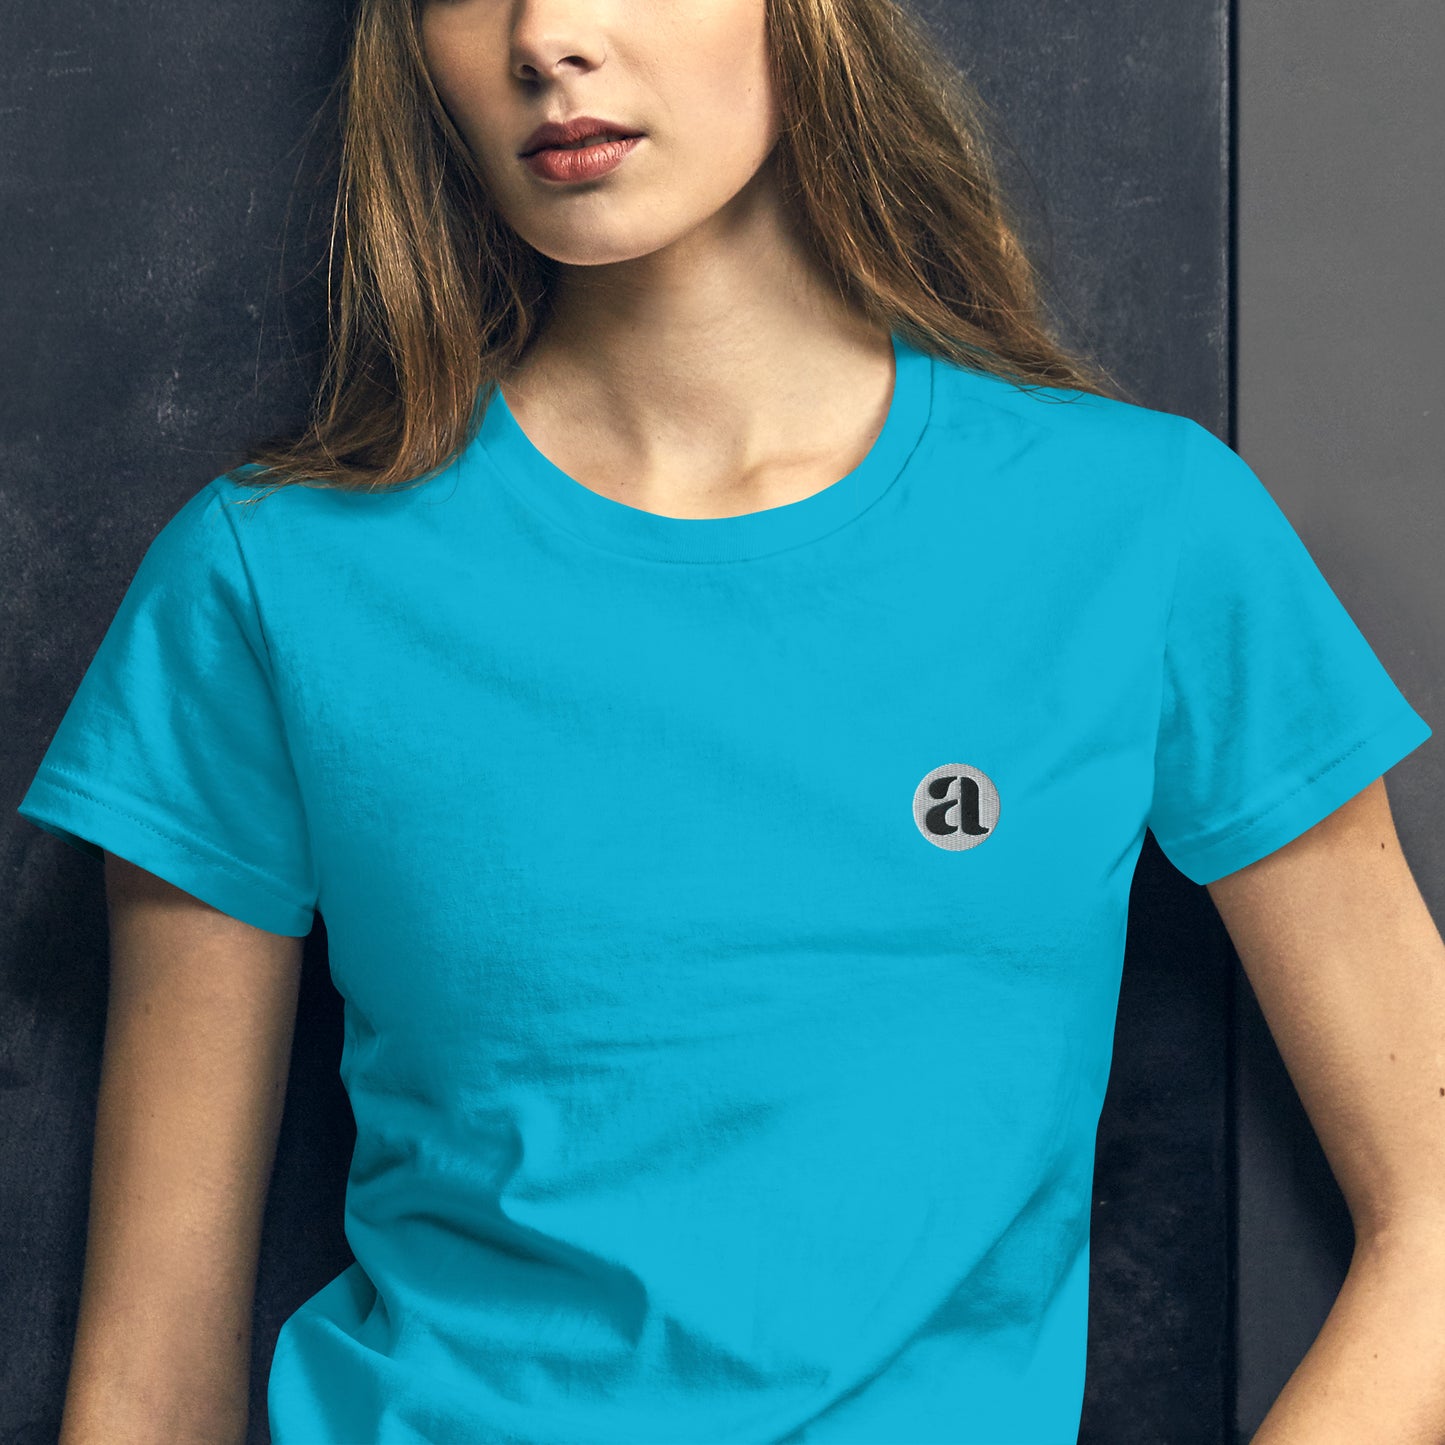 Algorhythm: Women's Symbol T-Shirt